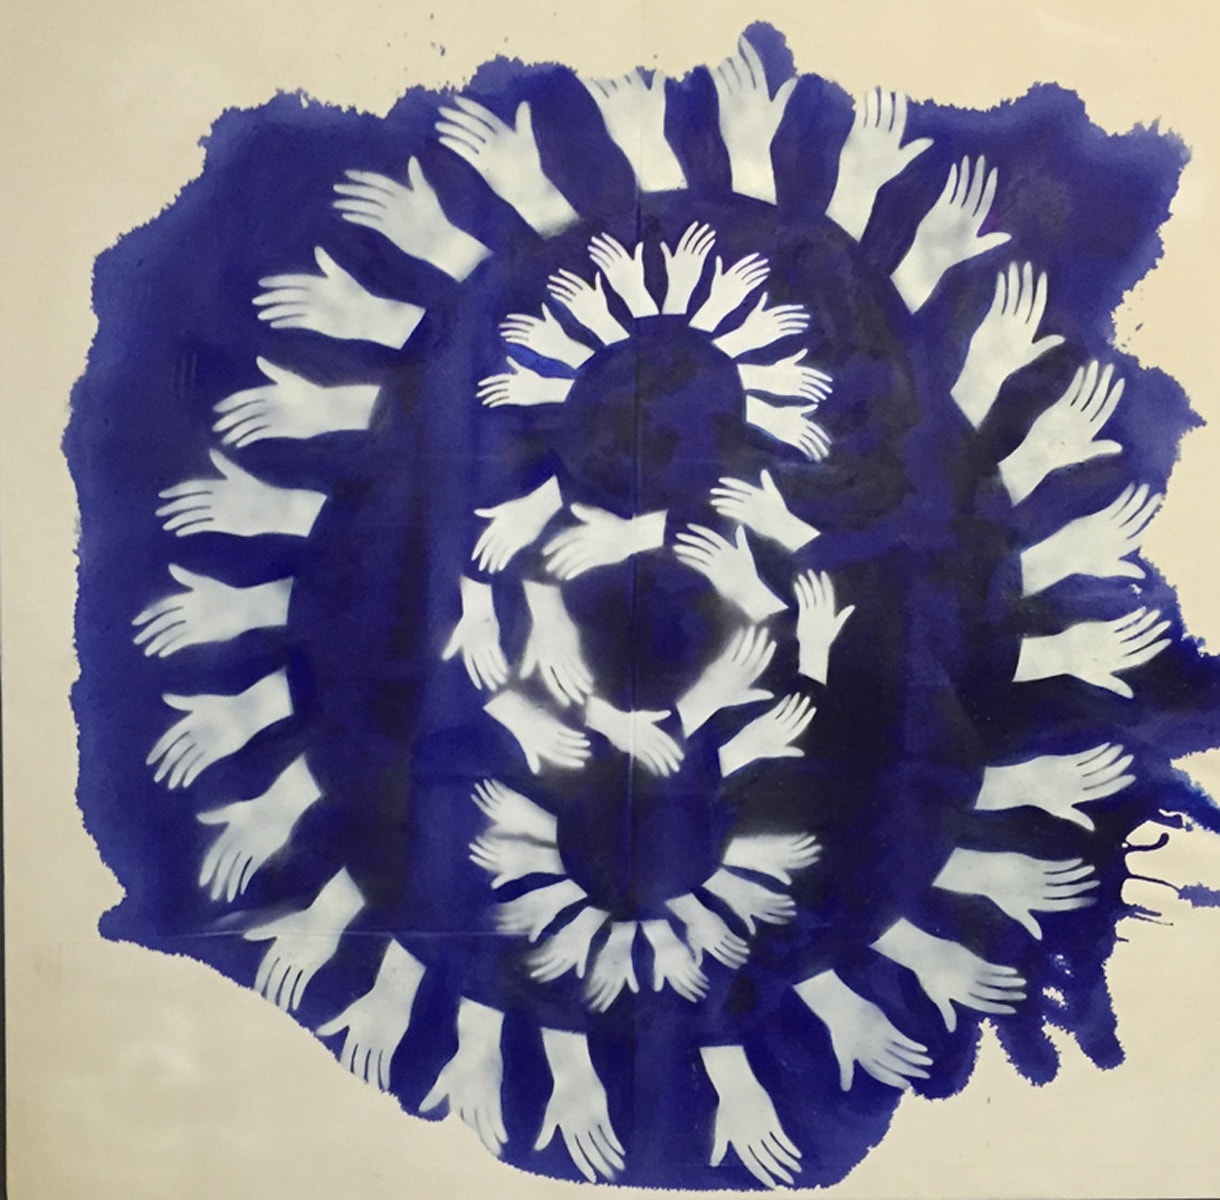 Pigments and medium on canvas - 180 x 180 cm - 2015